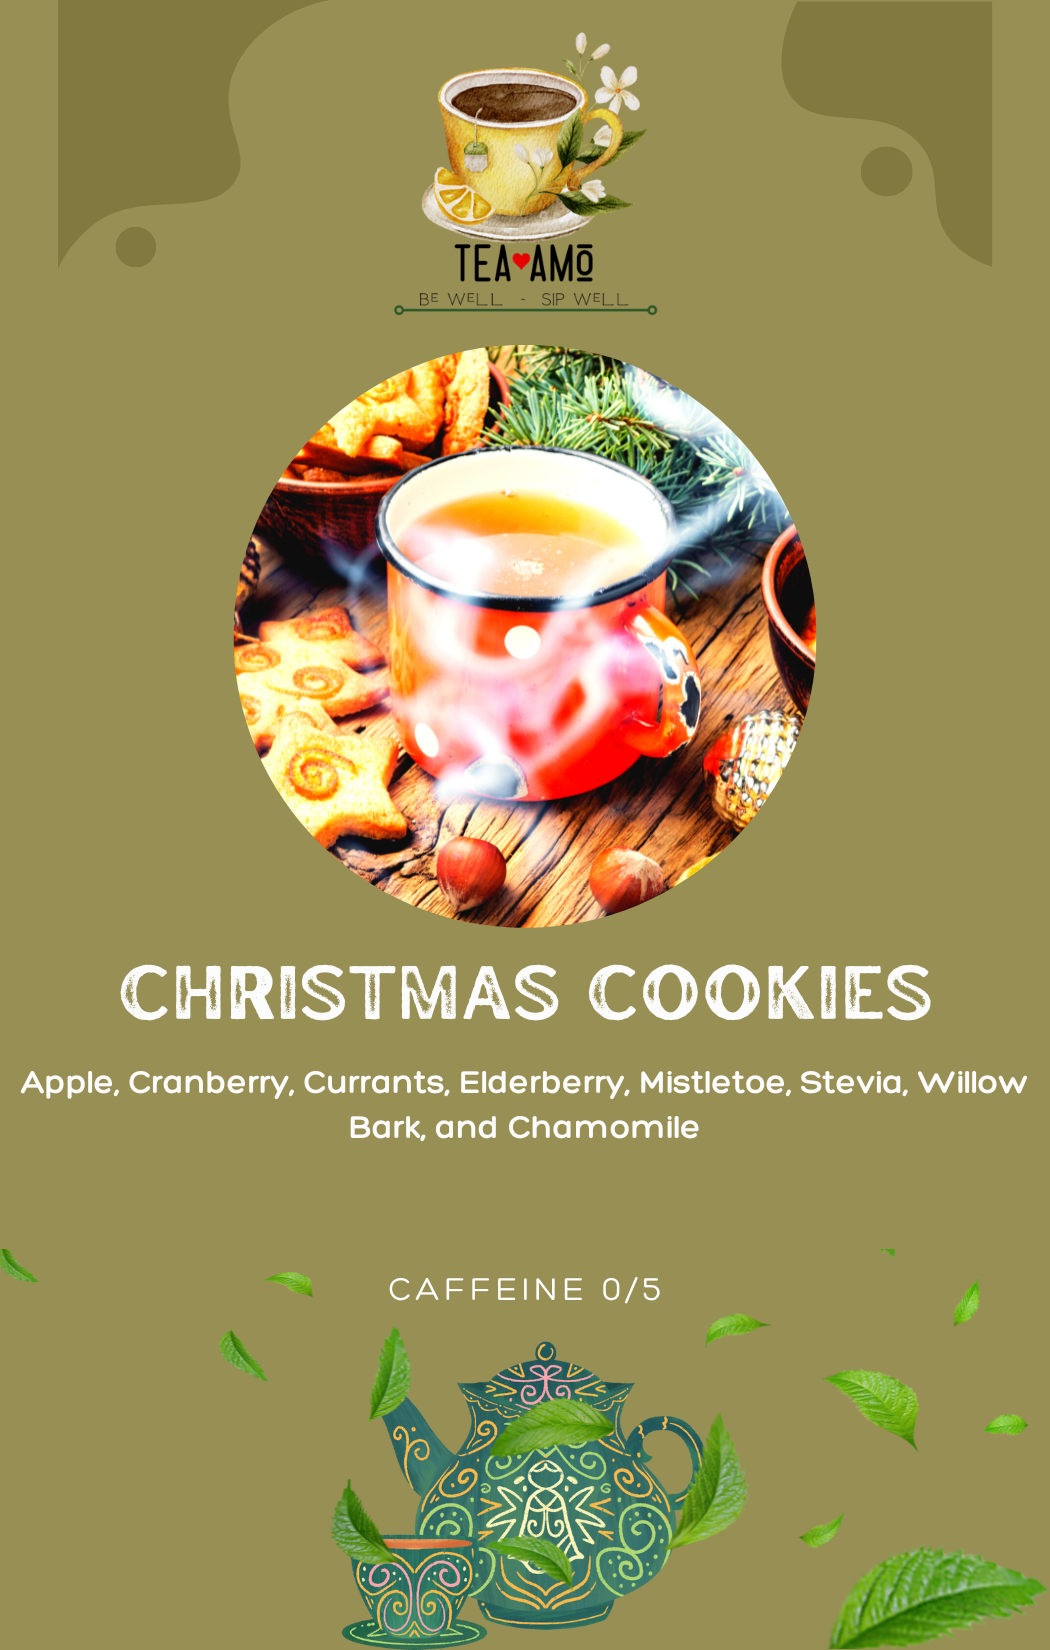 Tea Amo Wellness [LIMITED SEASONAL BLENDS]: Christmas Cookies